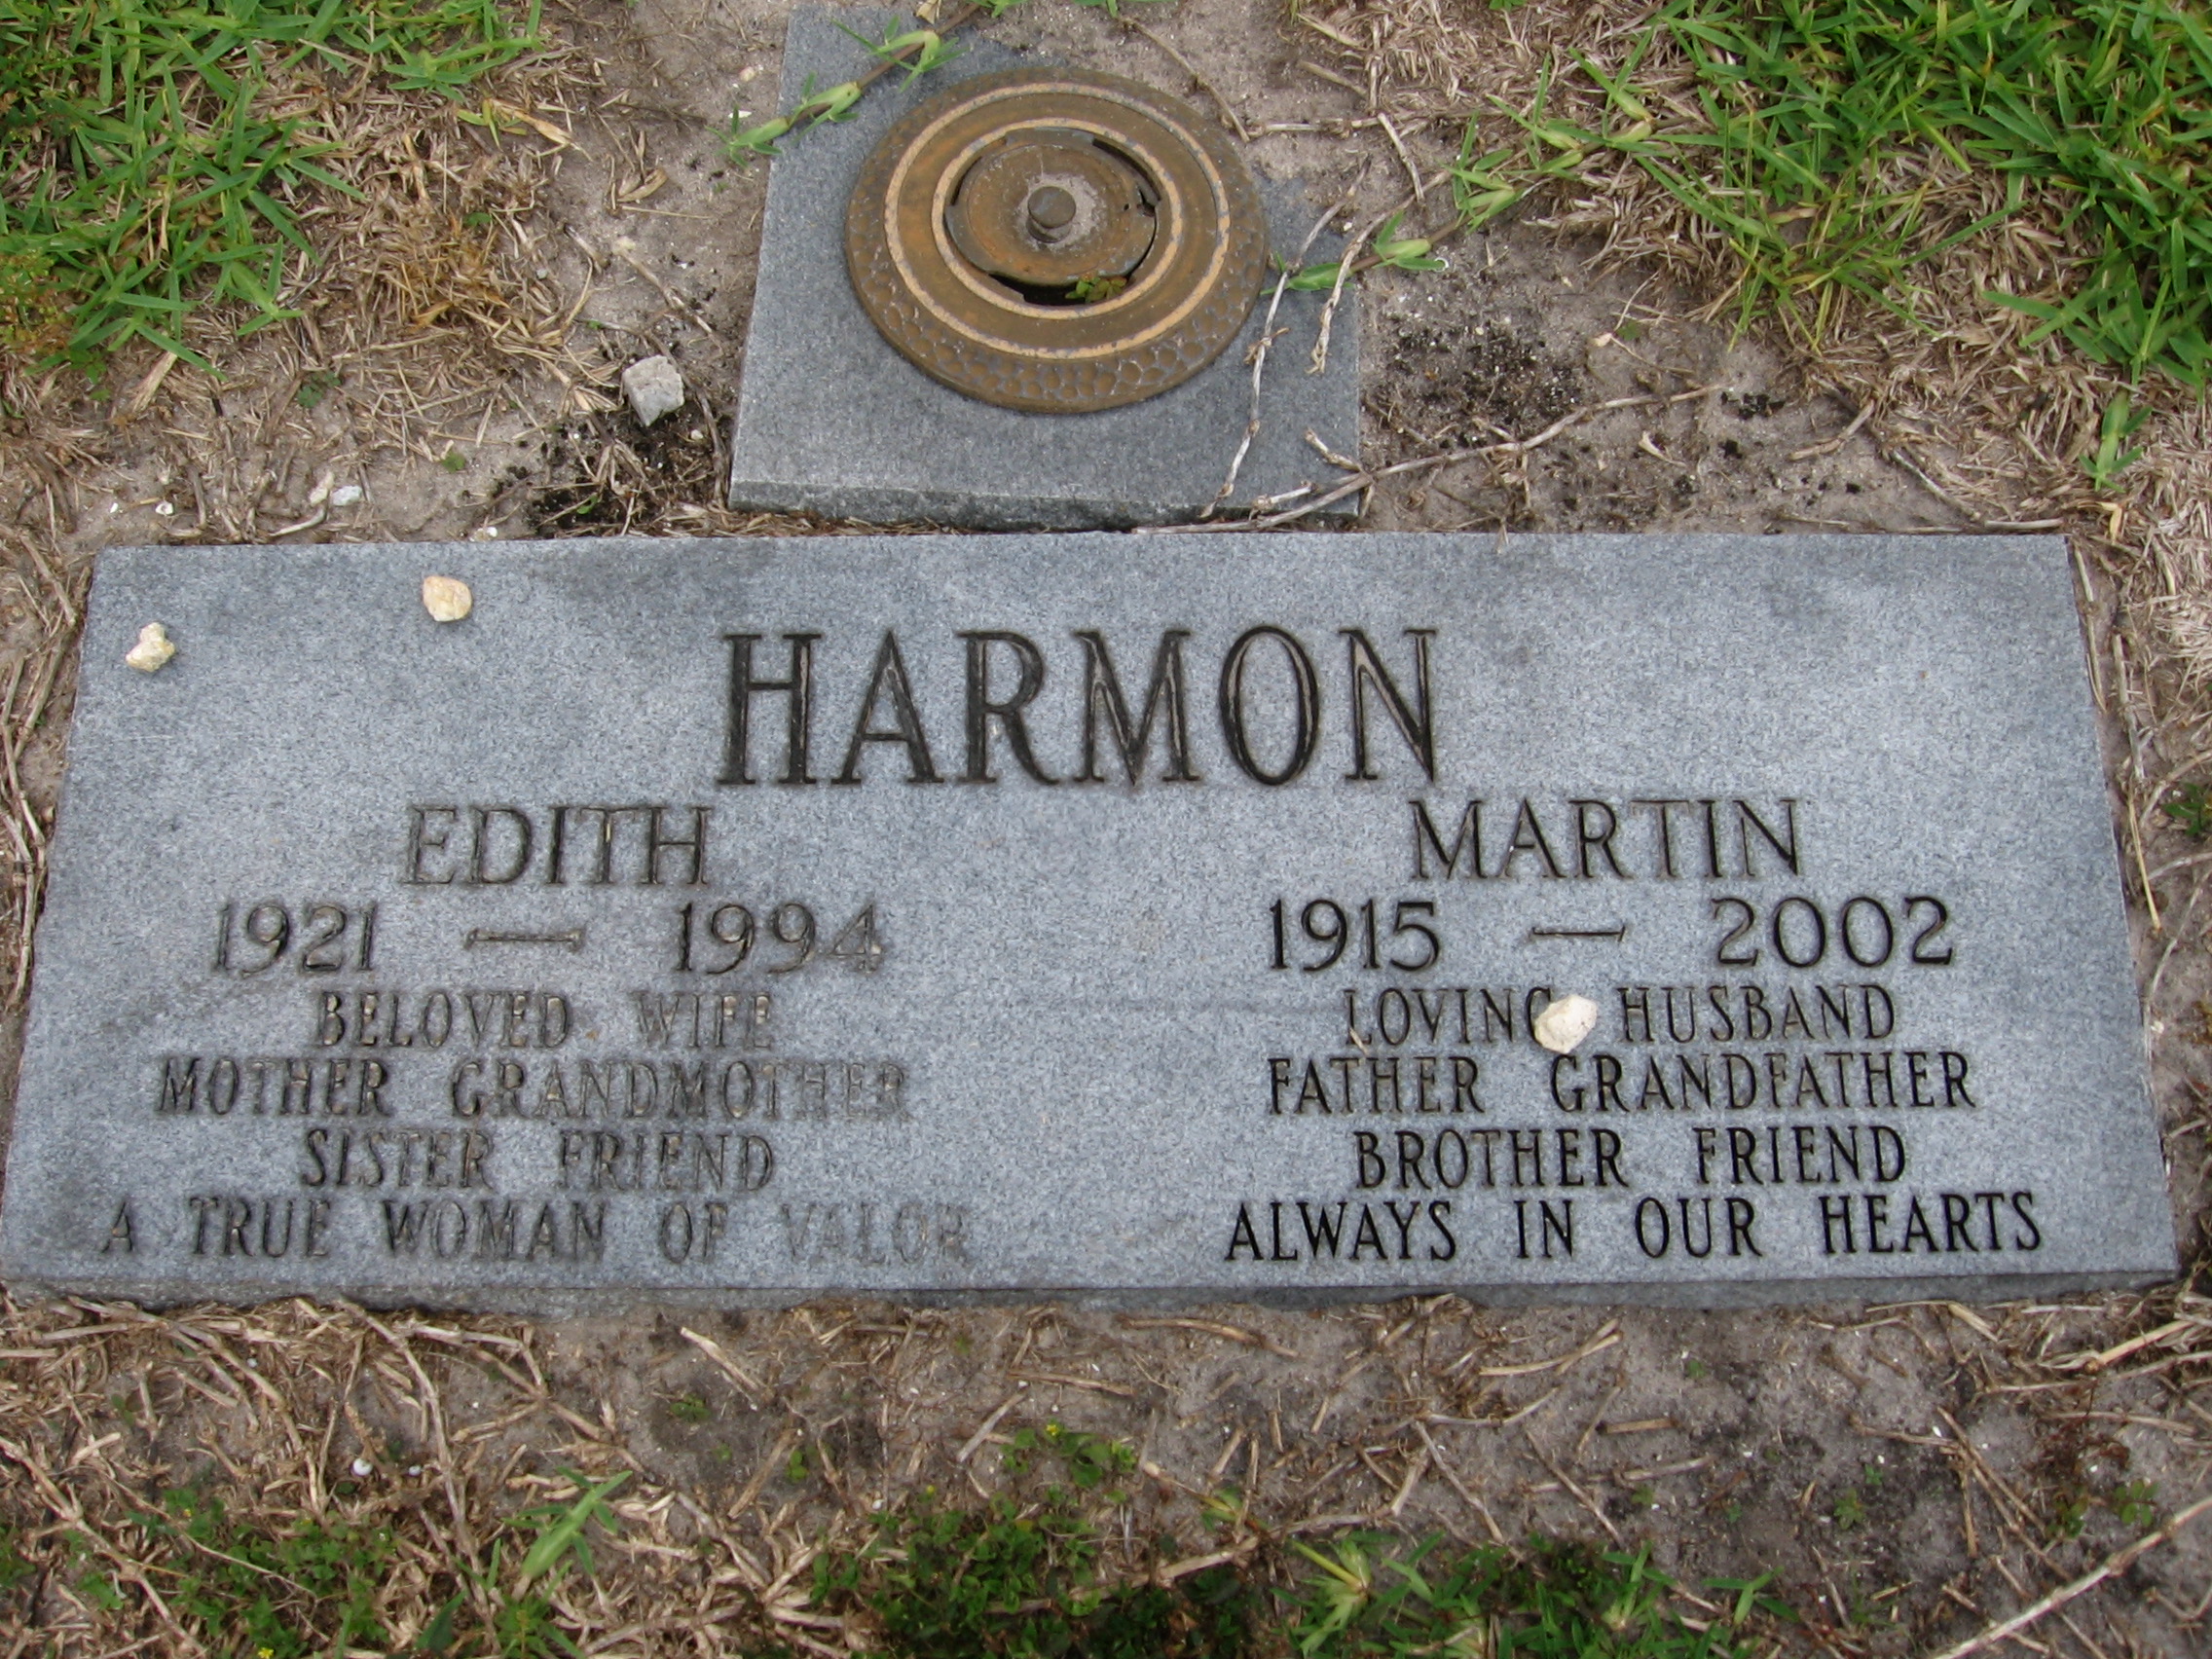 Martin Harmon